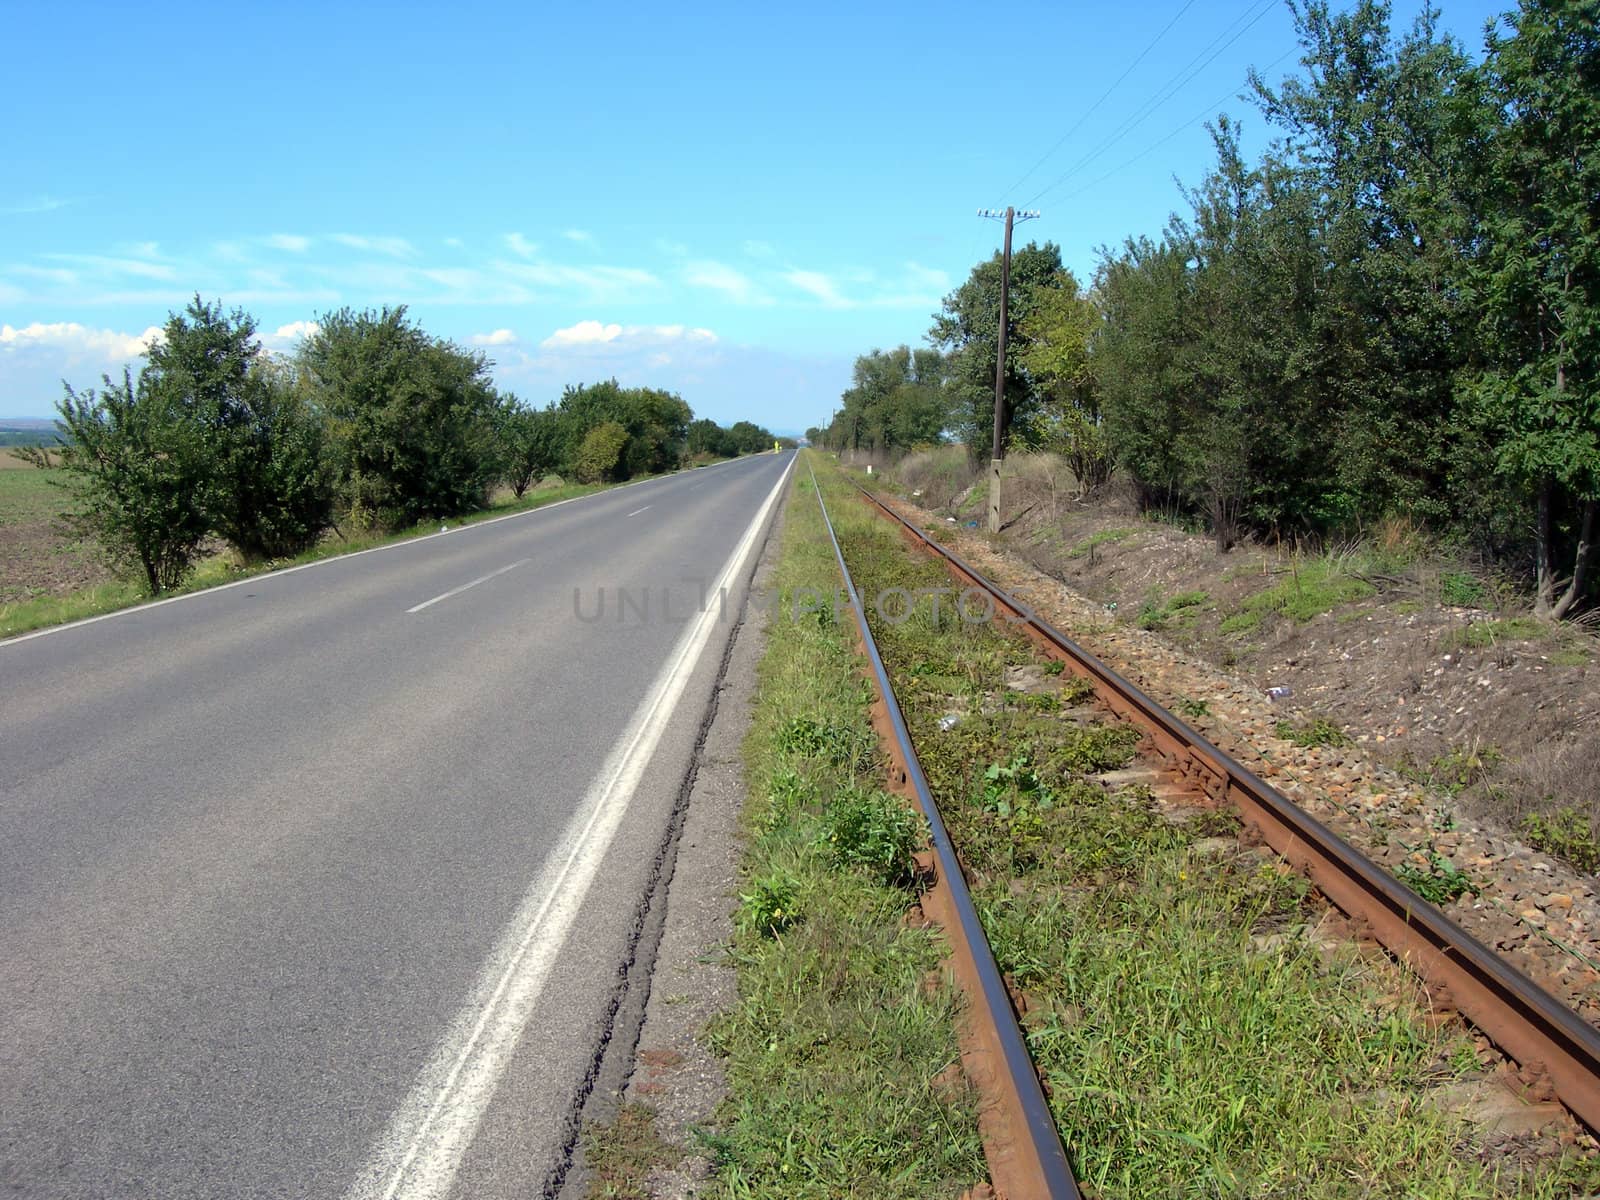           Railway and parallel asphalt road 